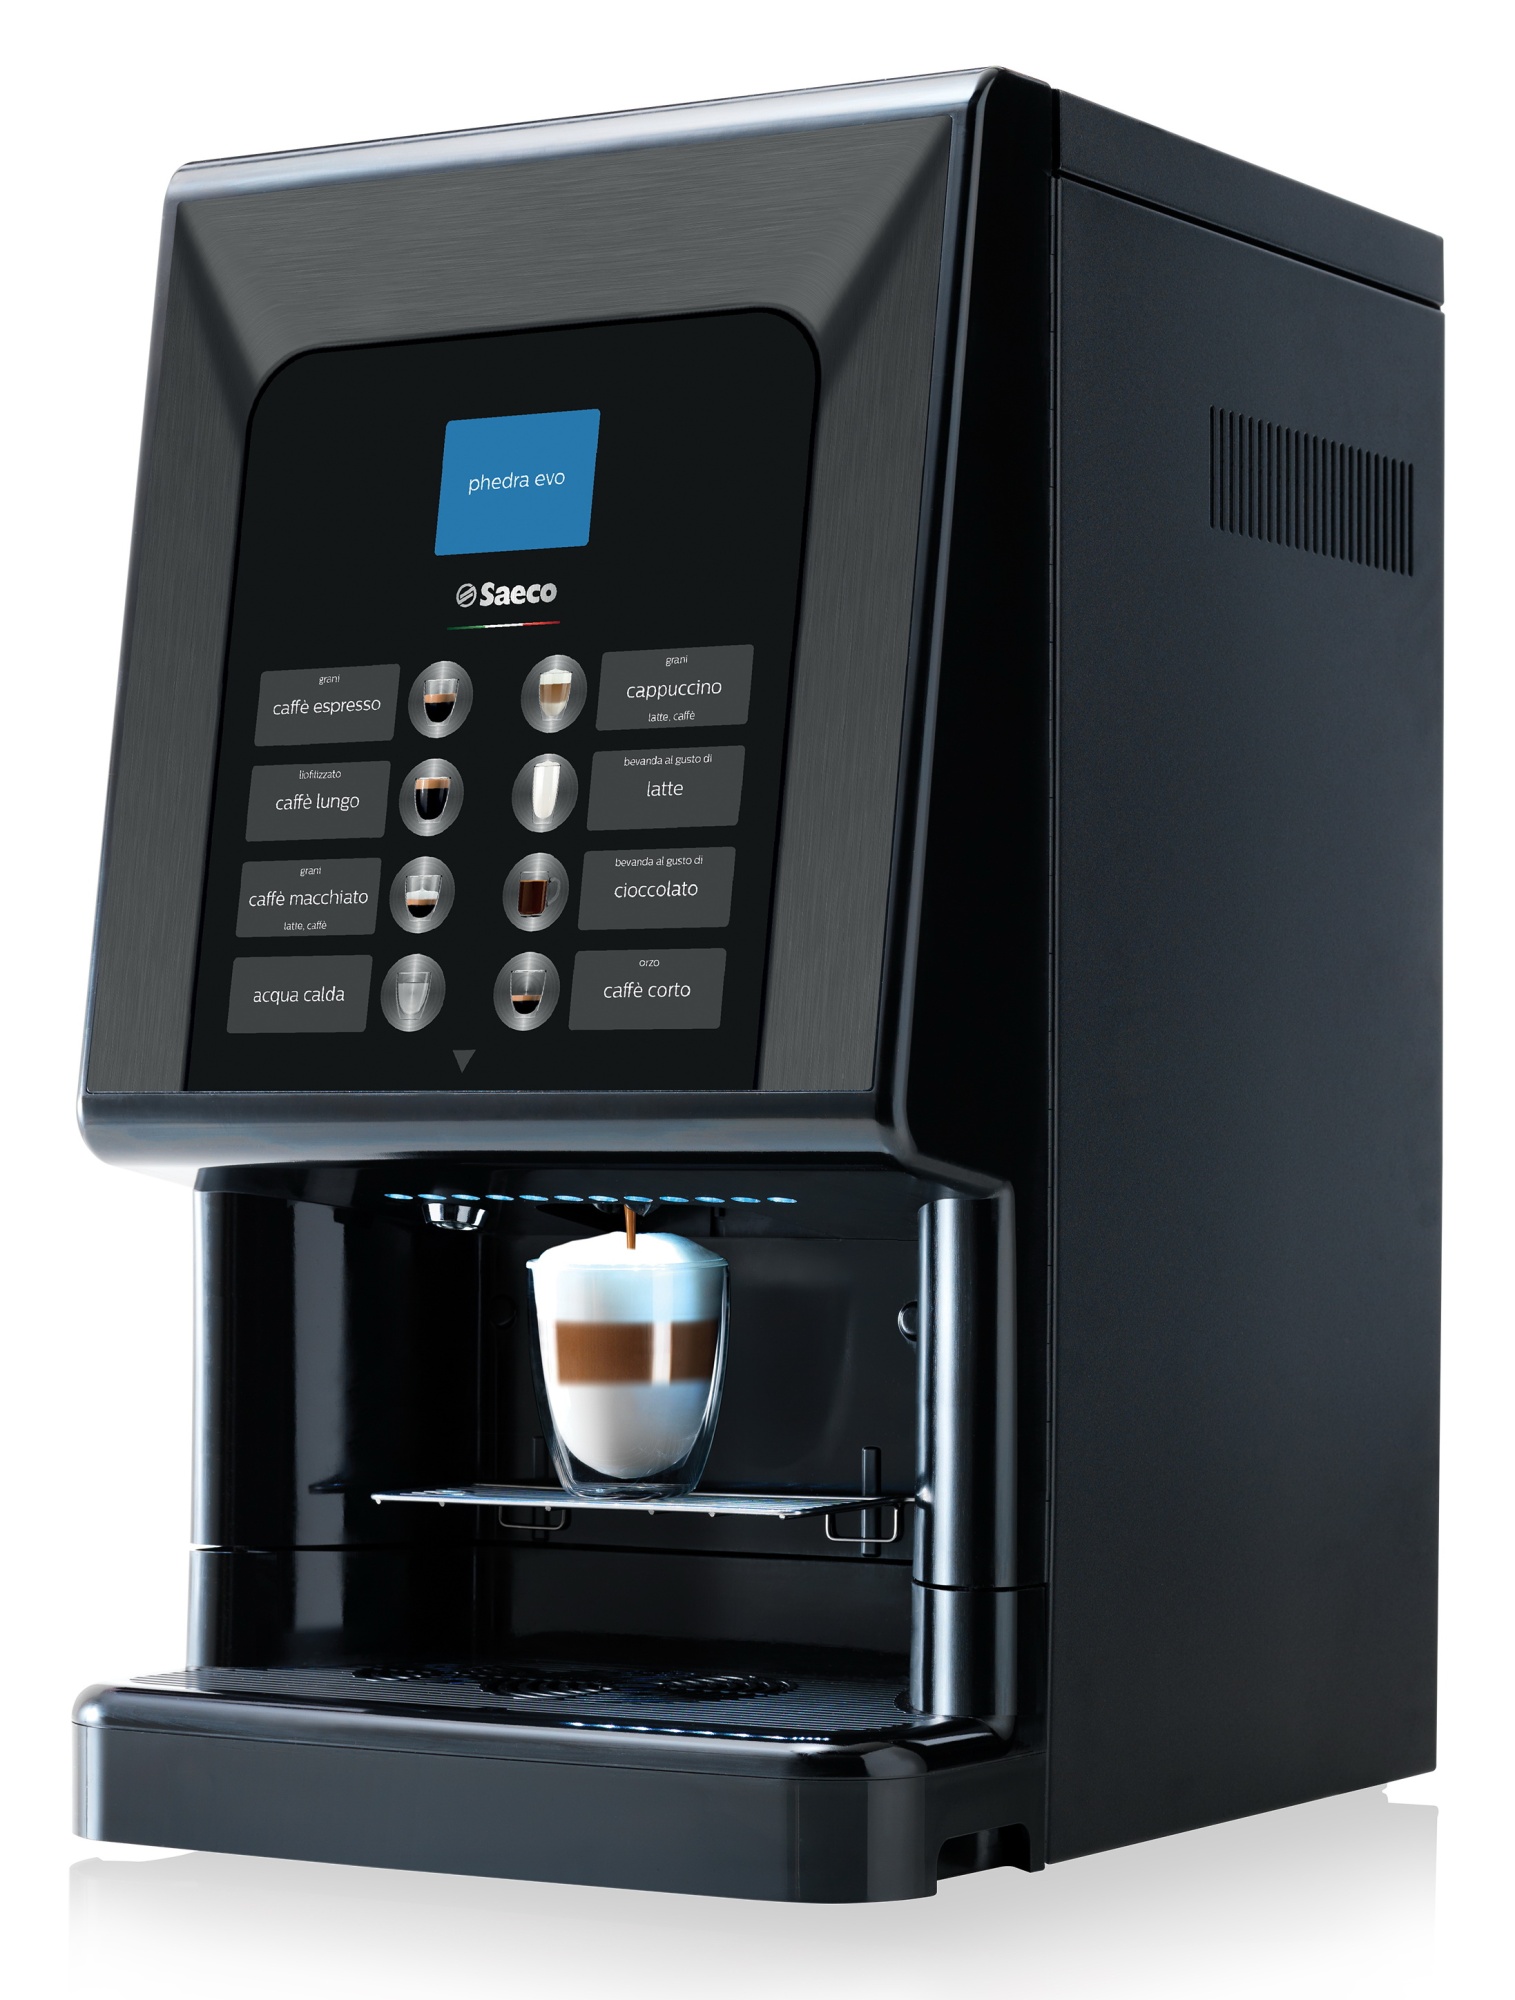 Кофейный автомат Saeco Phedra EVO CAPPUCCINO